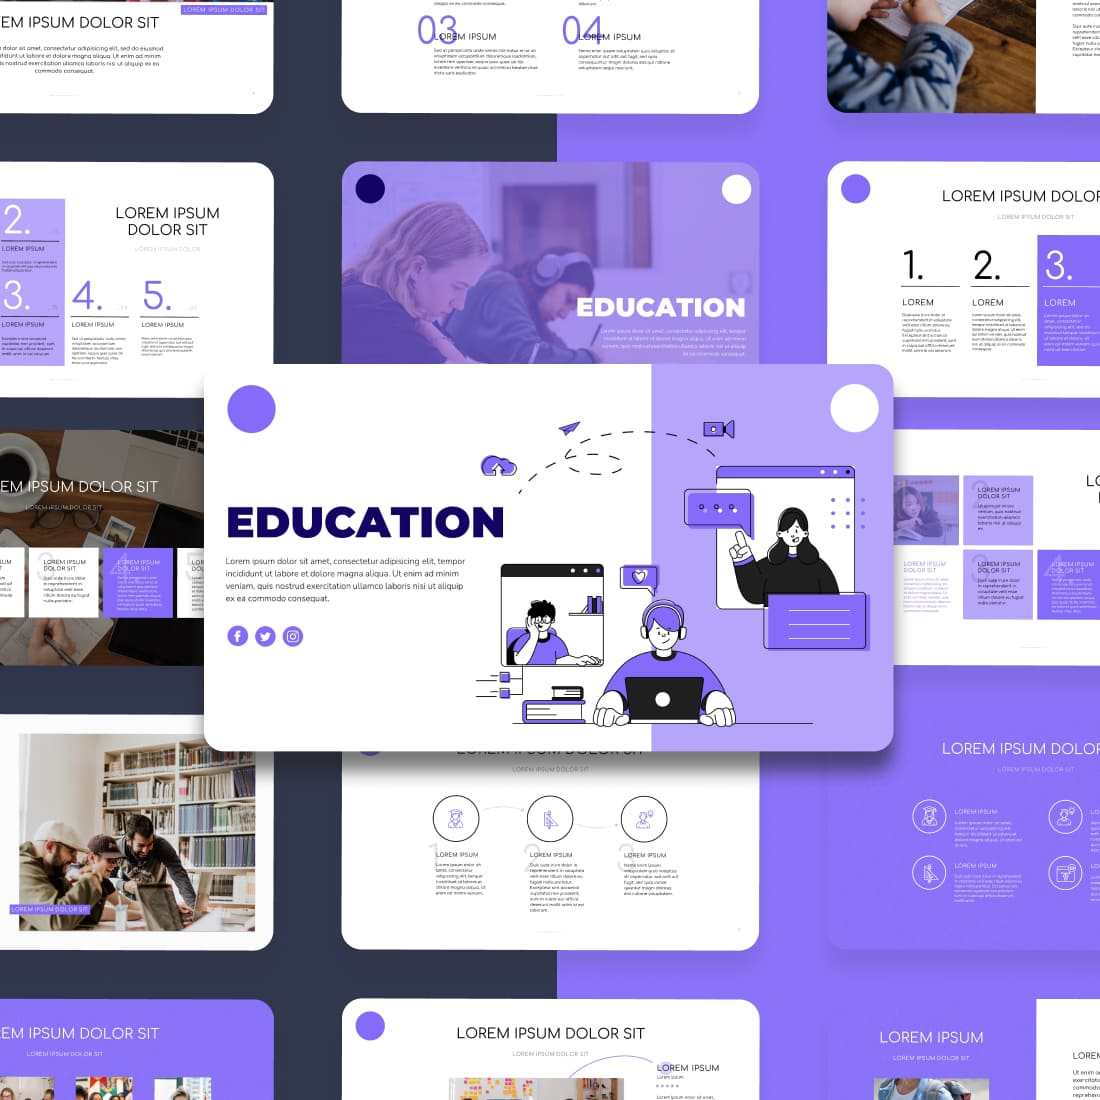 Education Presentation: 50 Slides PPTX, KEY, Google Slides cover.